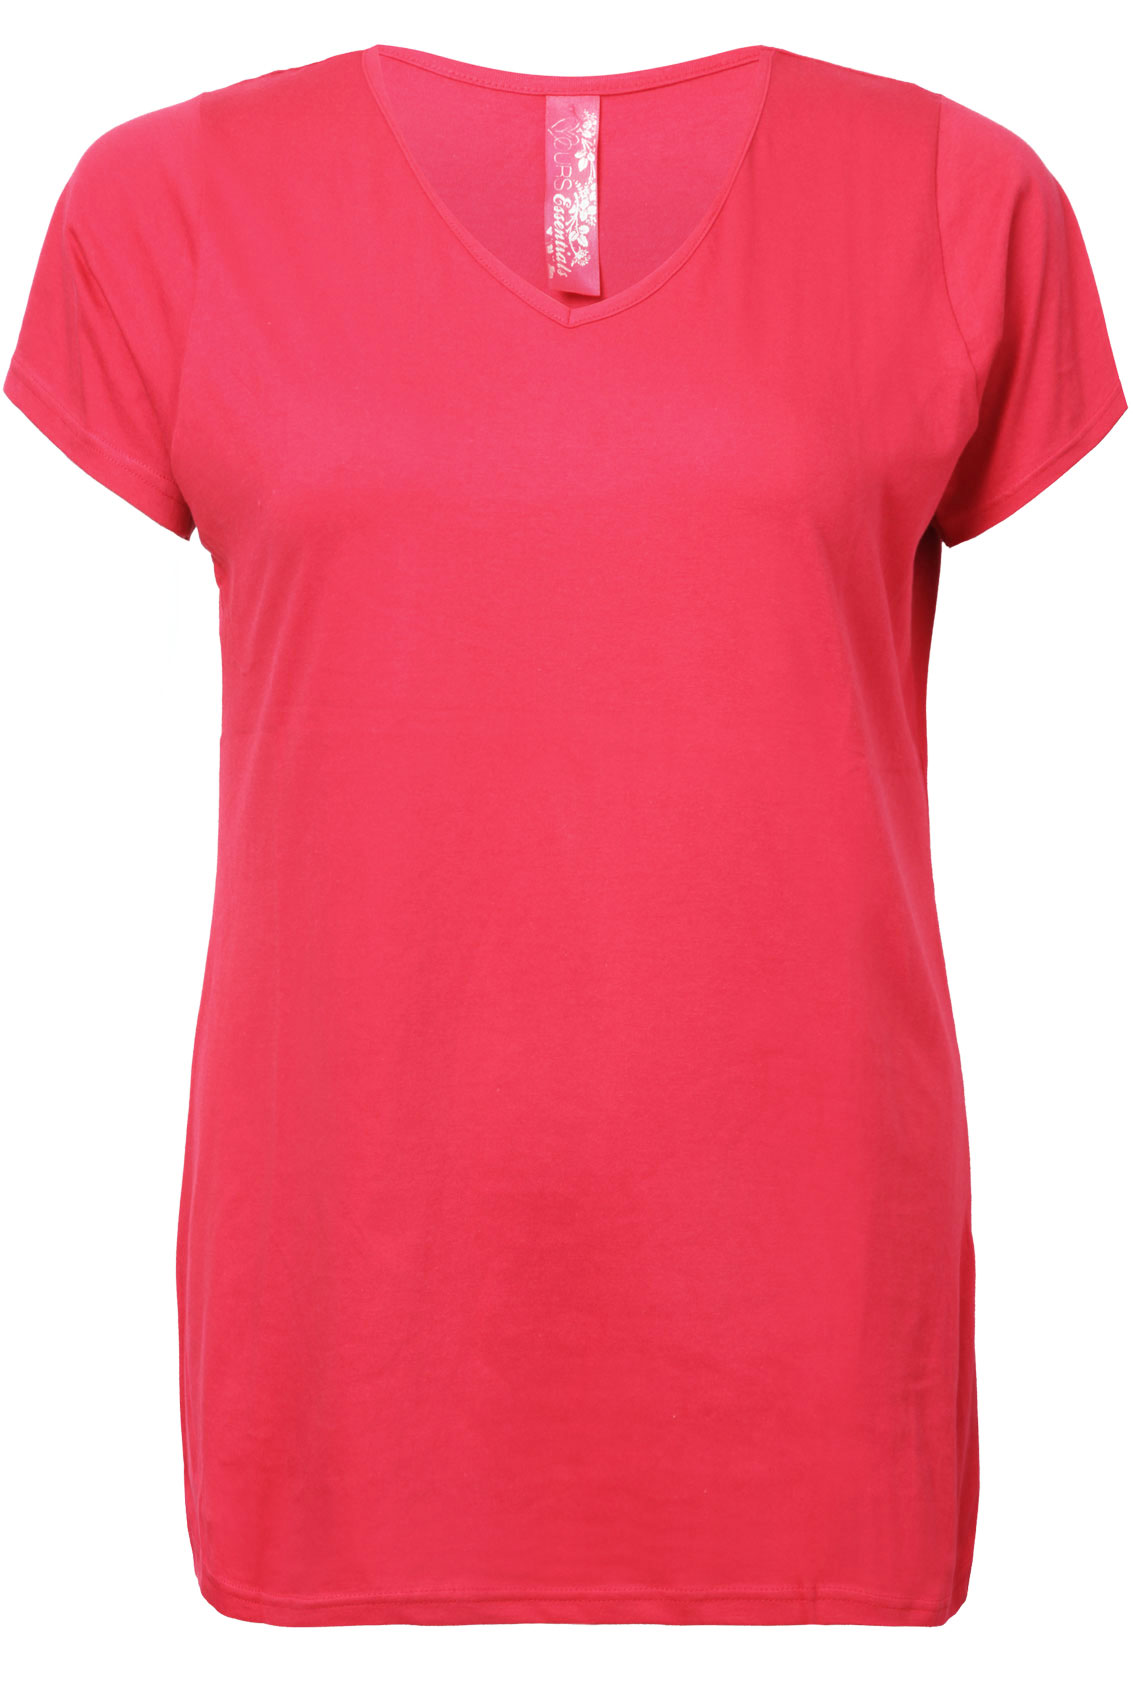 Tomato Red Short Sleeved V-Neck Basic T-shirt plus size 16,18,20,22,24 ...